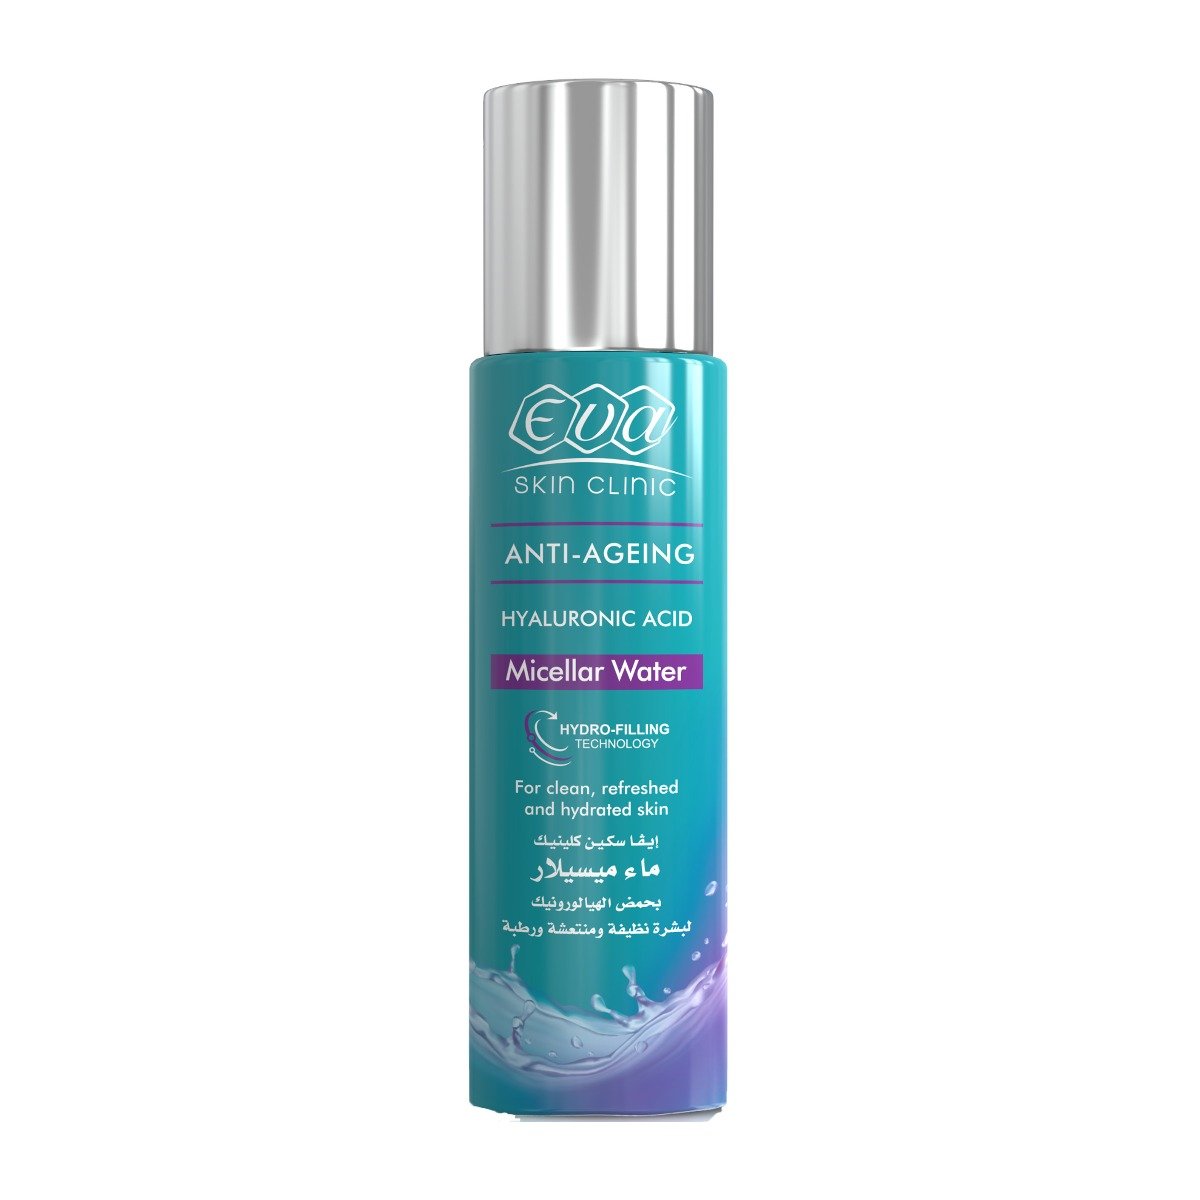 Eva Anti-Ageing Hyaluronic Acid Micellar Water - 200ml - Bloom Pharmacy